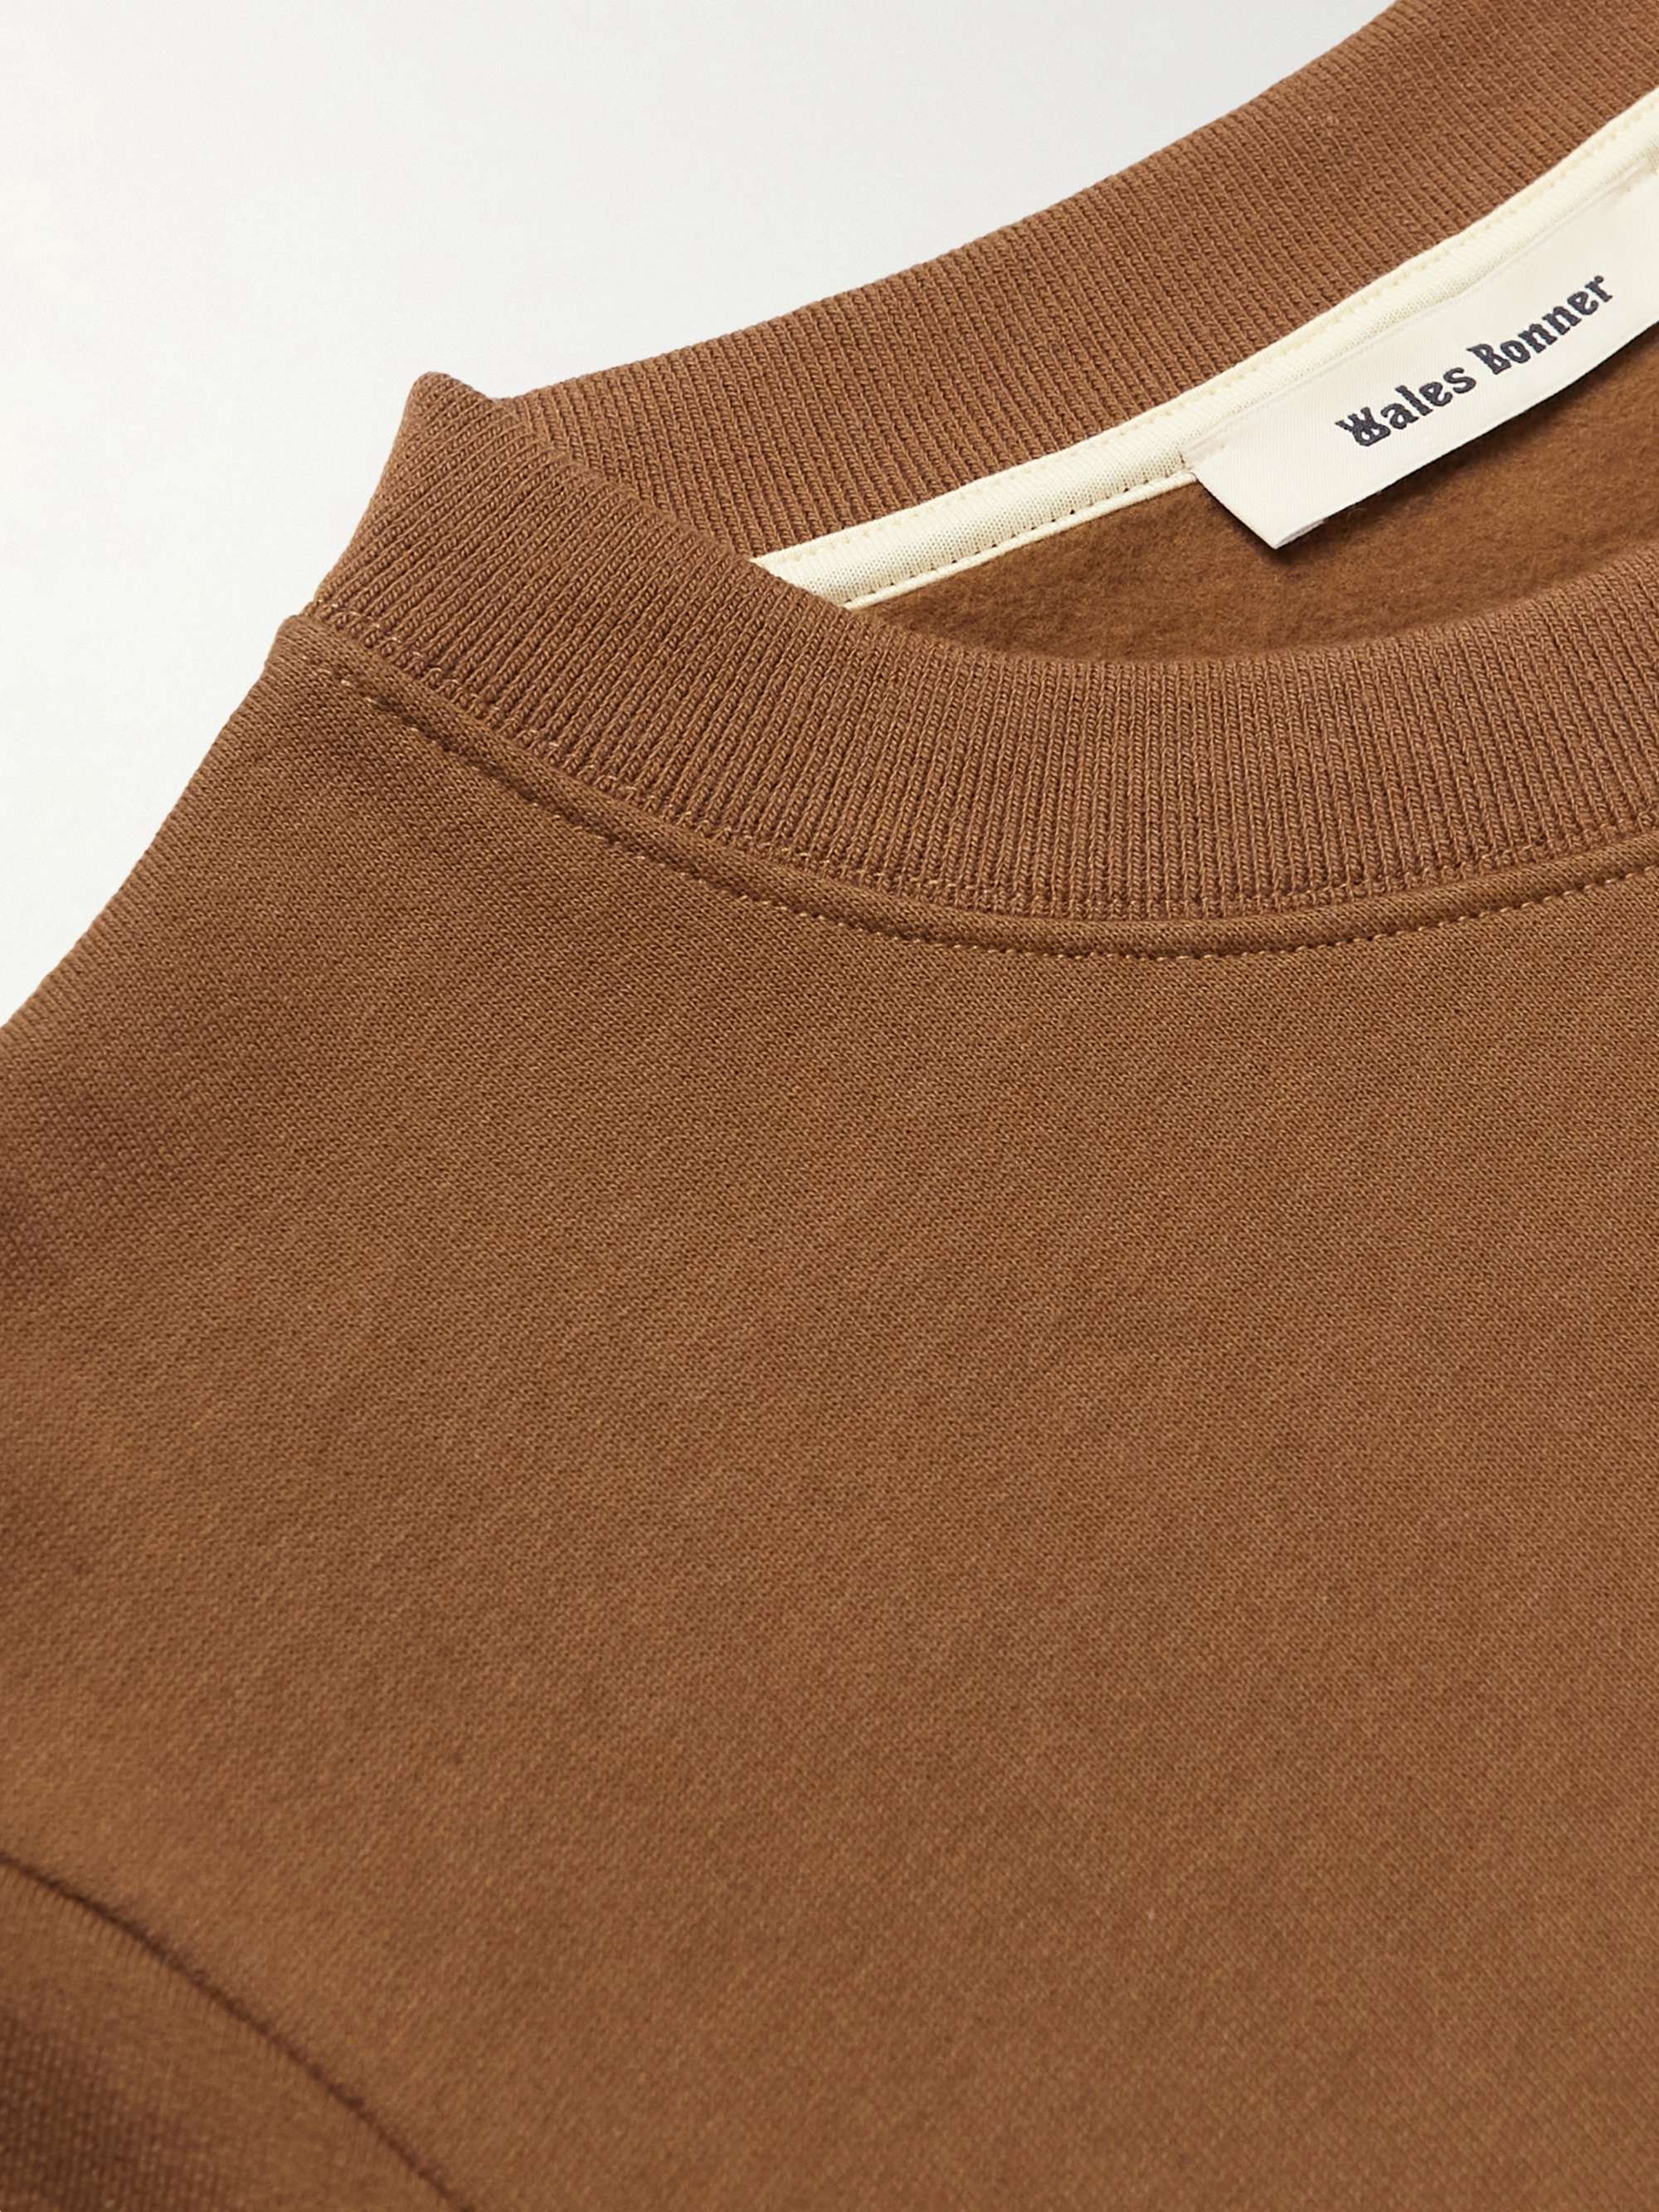 WALES BONNER Slim-Fit Logo-Appliquéd Organic Cotton-Jersey Sweatshirt